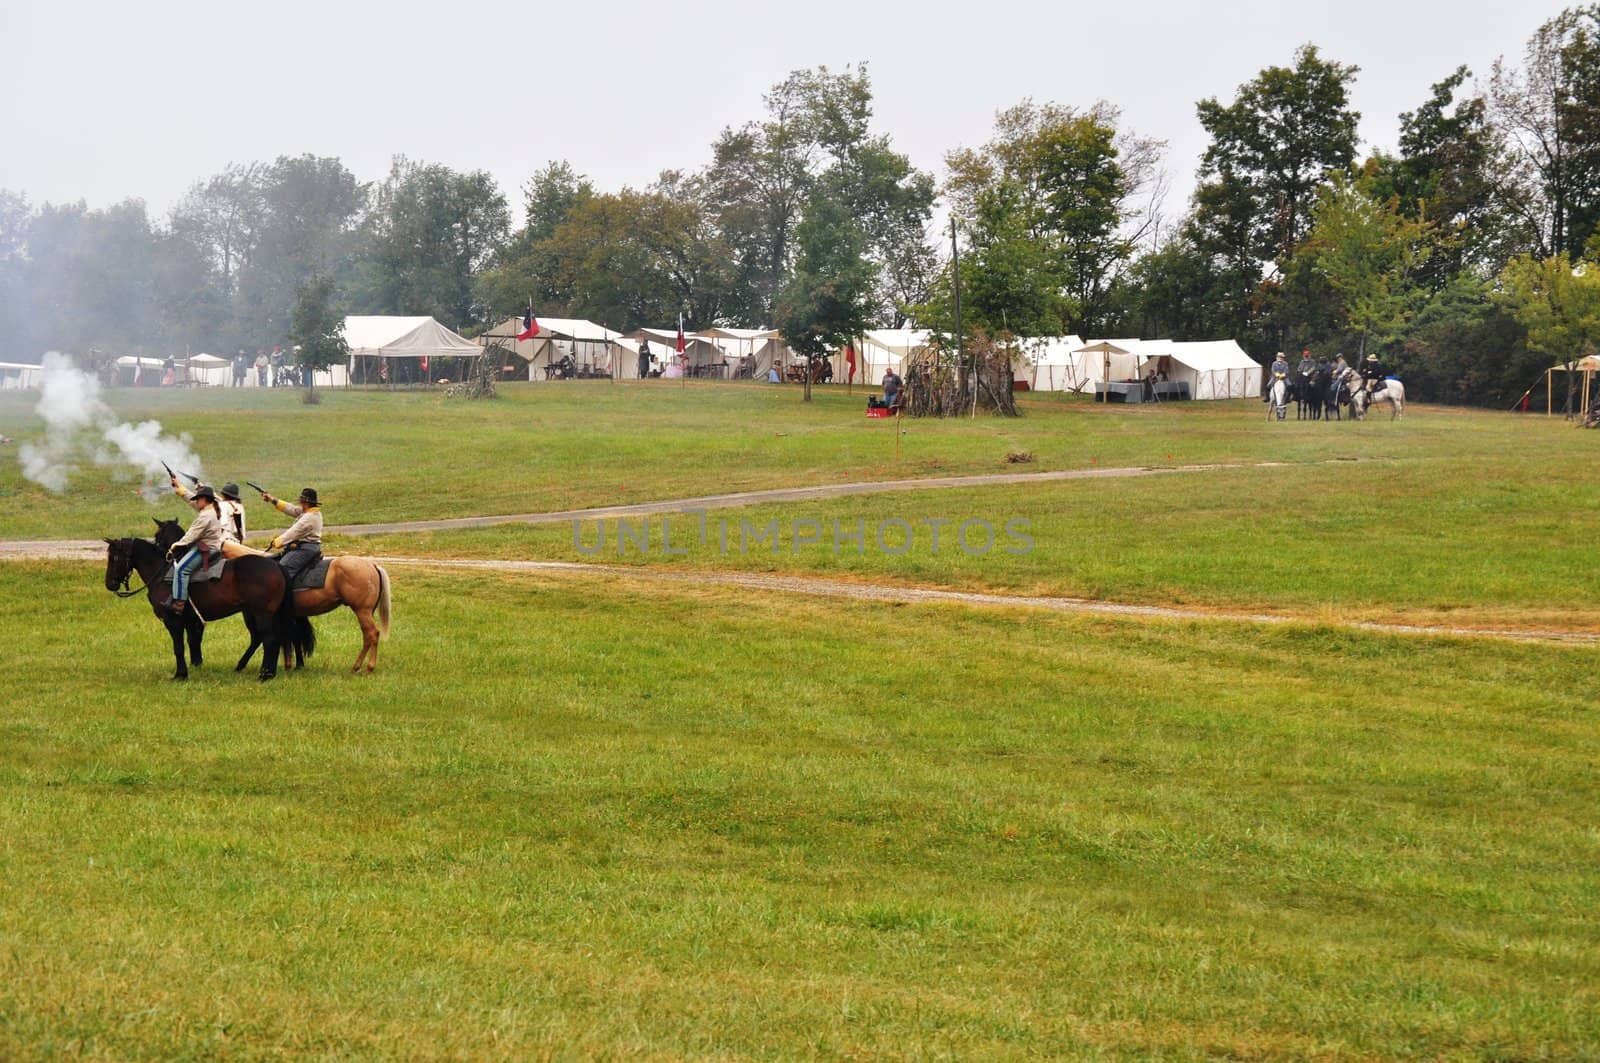 Civil War Re-enactment - background on horses by RefocusPhoto